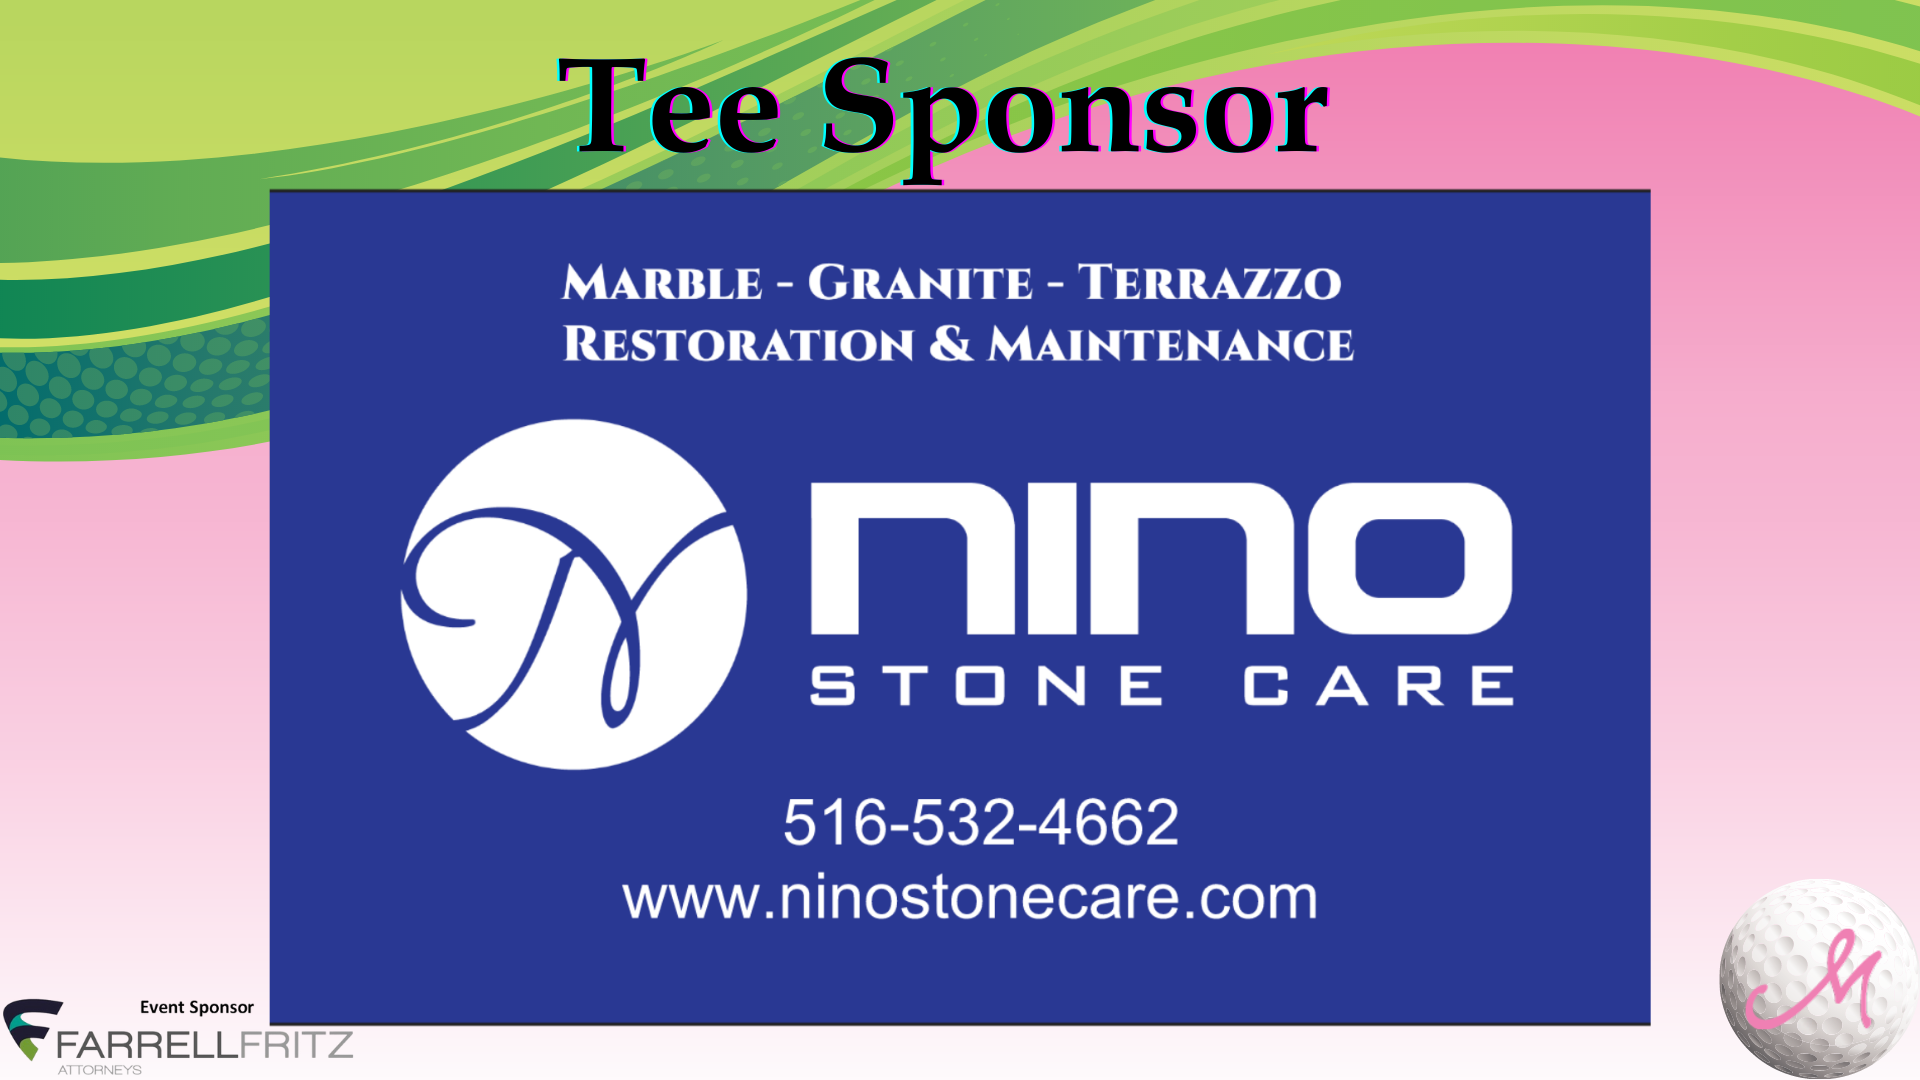 E-Journal – Golf 2022 – Tee Sponsor – Nino Stone Care (1)